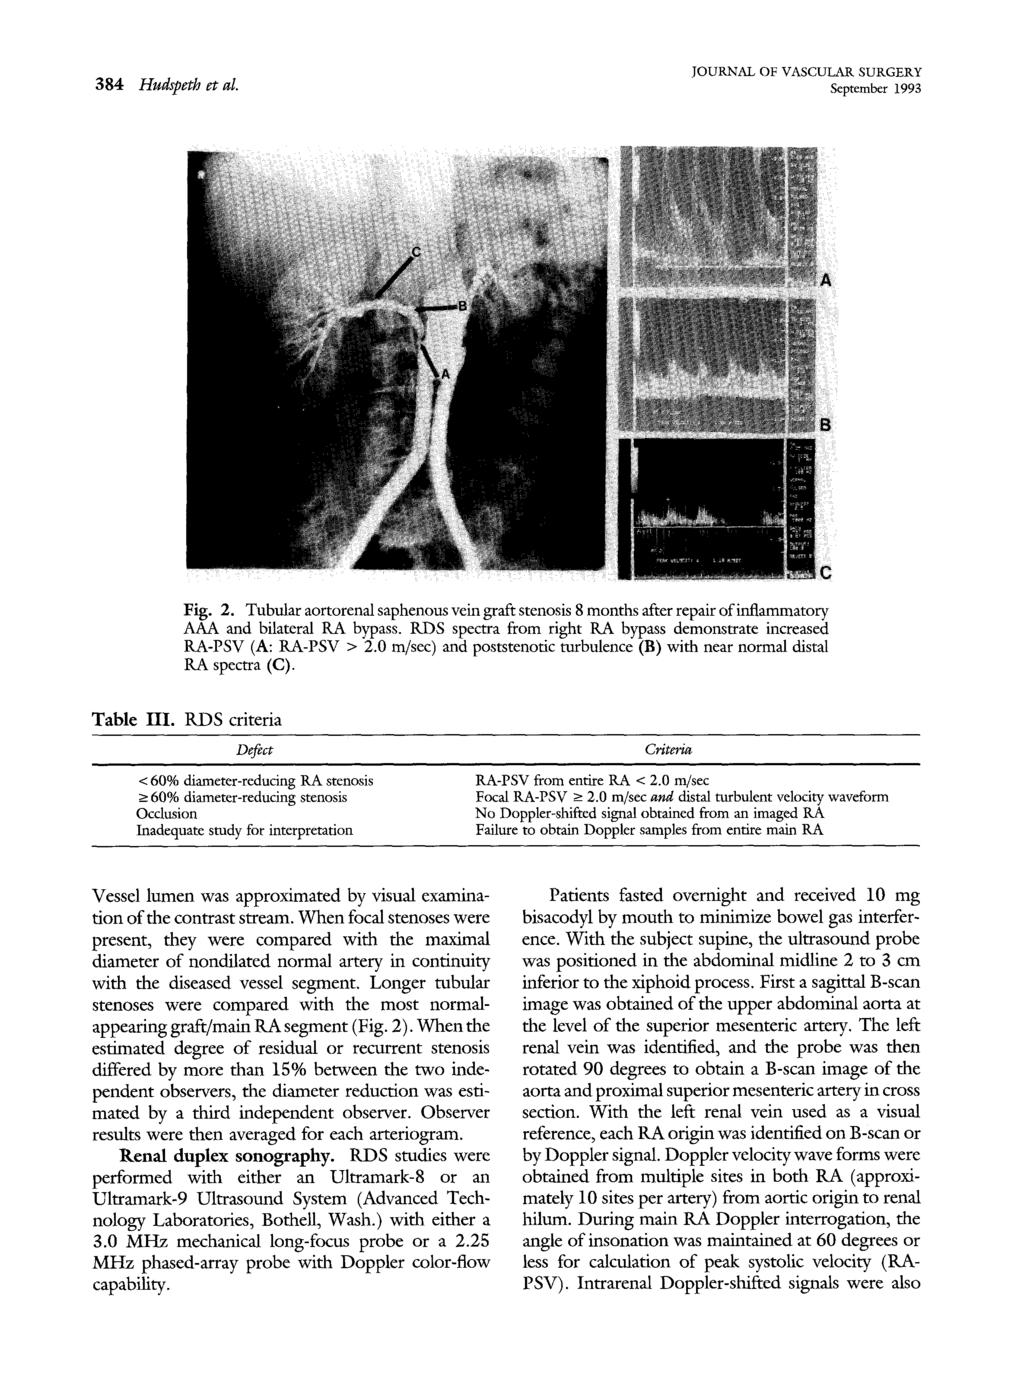 384 Hudspeth et al. September 1993 Fig. 2. Tubular aortorenal saphenous vein graft stenosis 8 months after repair of inflammatory AAA and bilateral RA bypass.